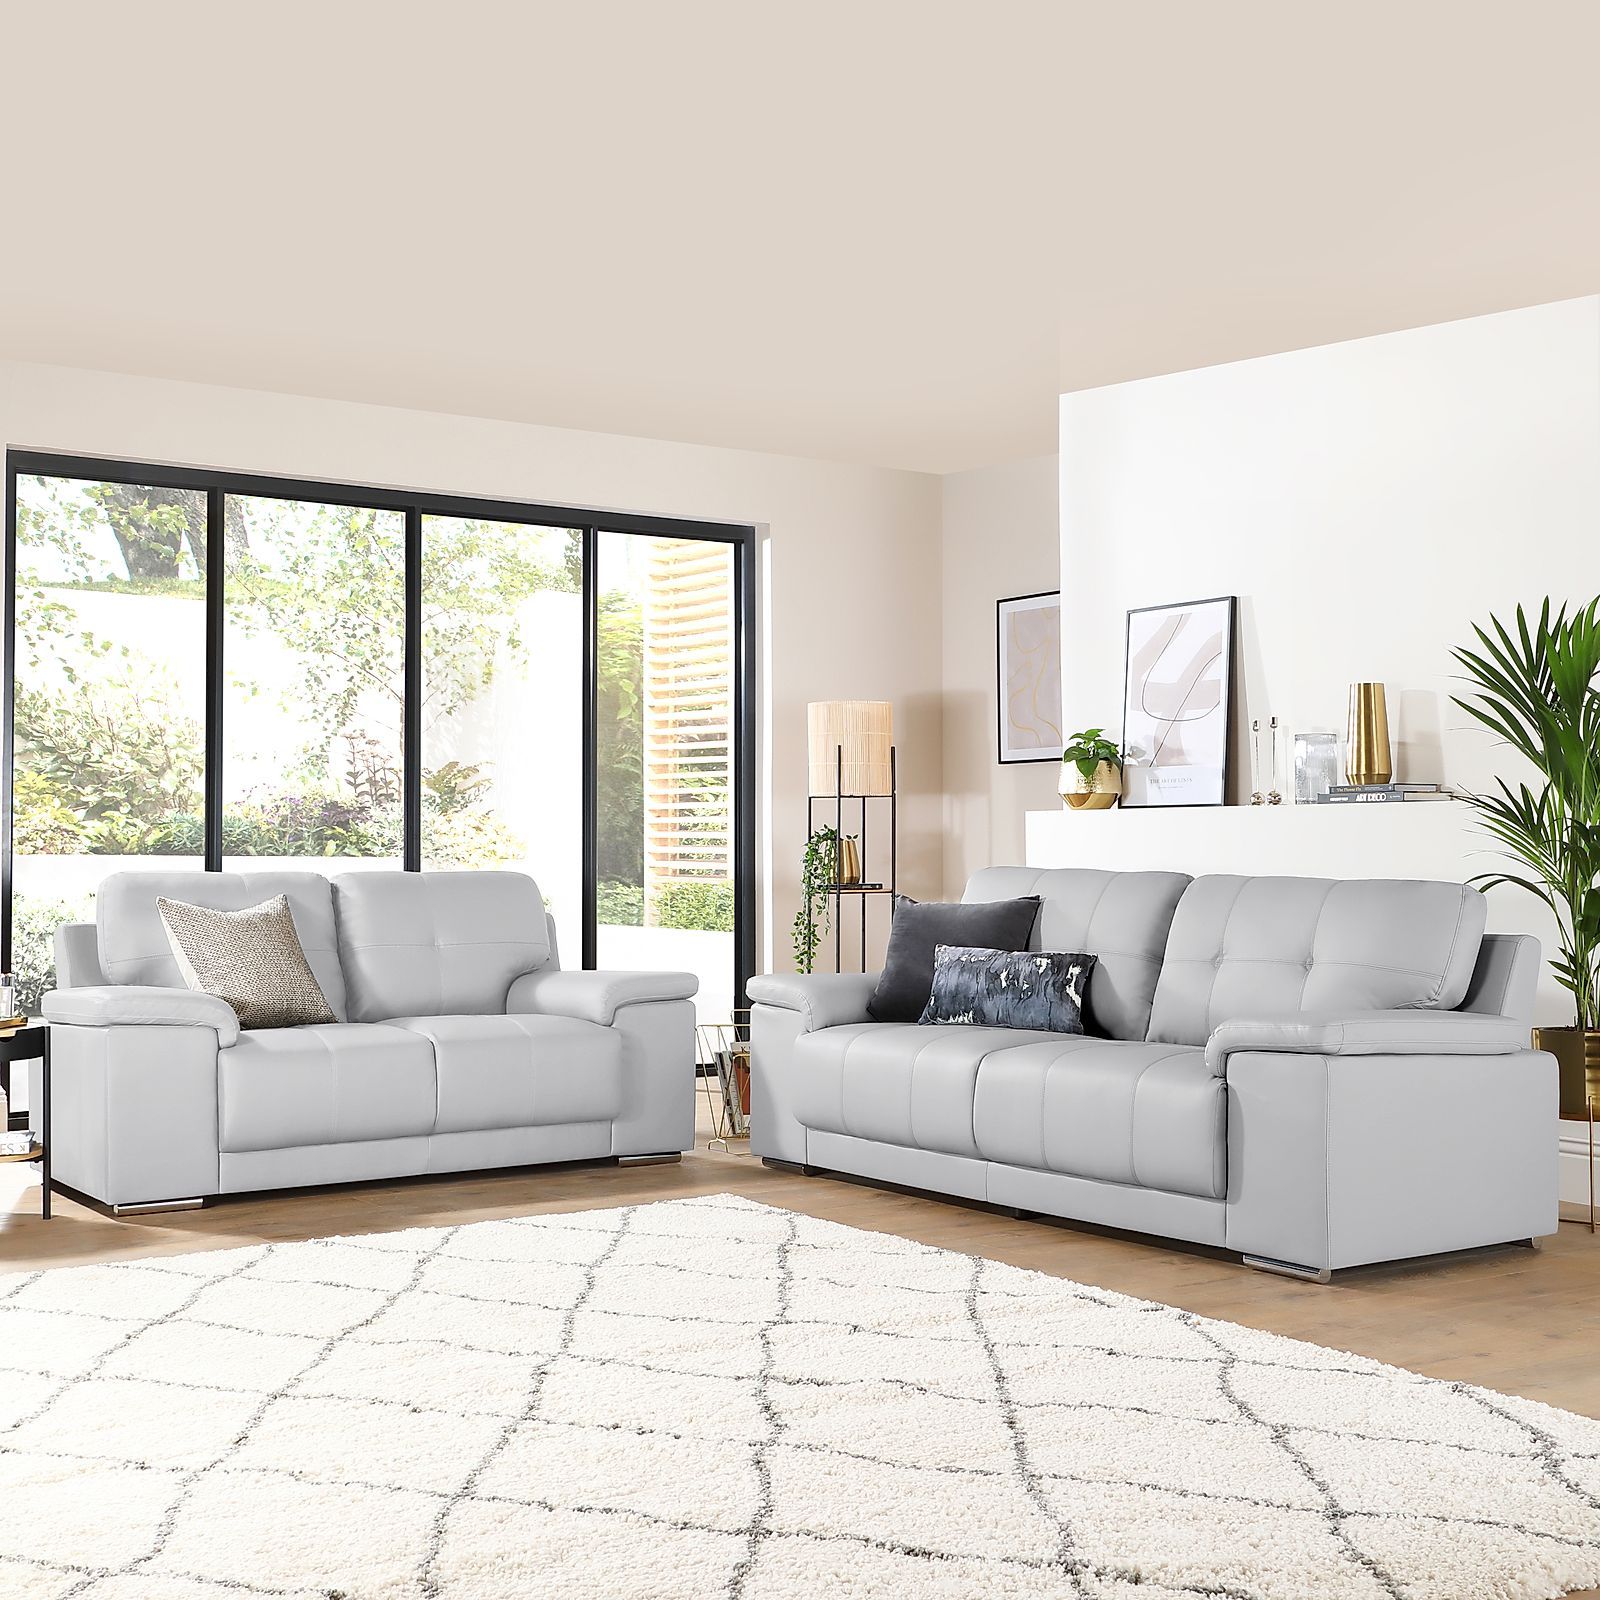 Kansas Light Grey Leather 3+2 Seater Sofa Set | Furniture Choice With Regard To Sofas In Light Gray (View 17 of 22)